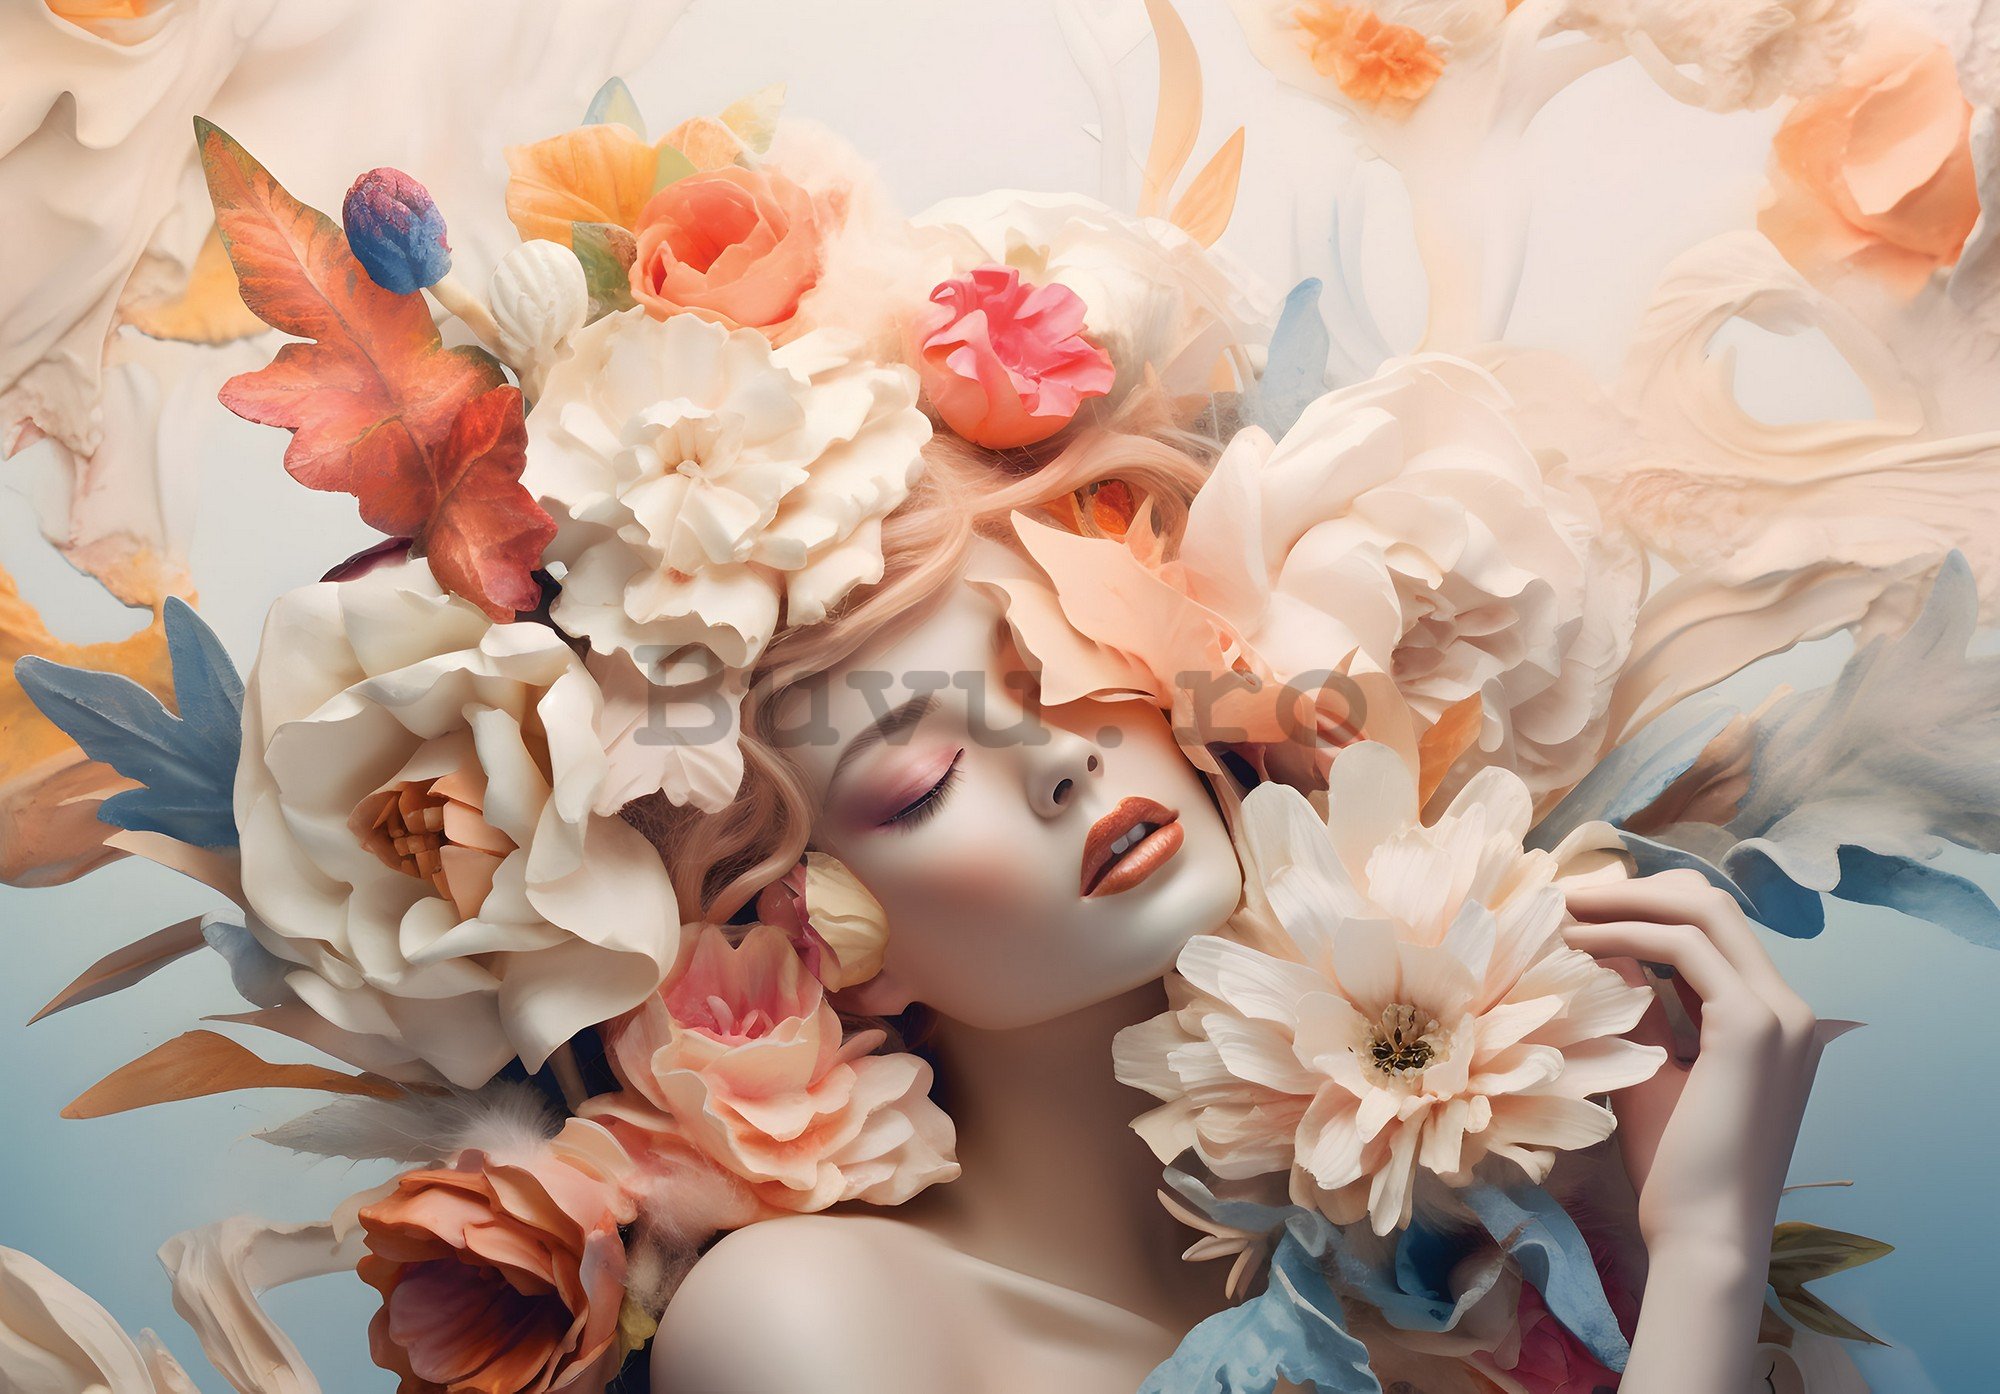 Fototapet vlies: Woman flowers pastel elegance - 254x184 cm